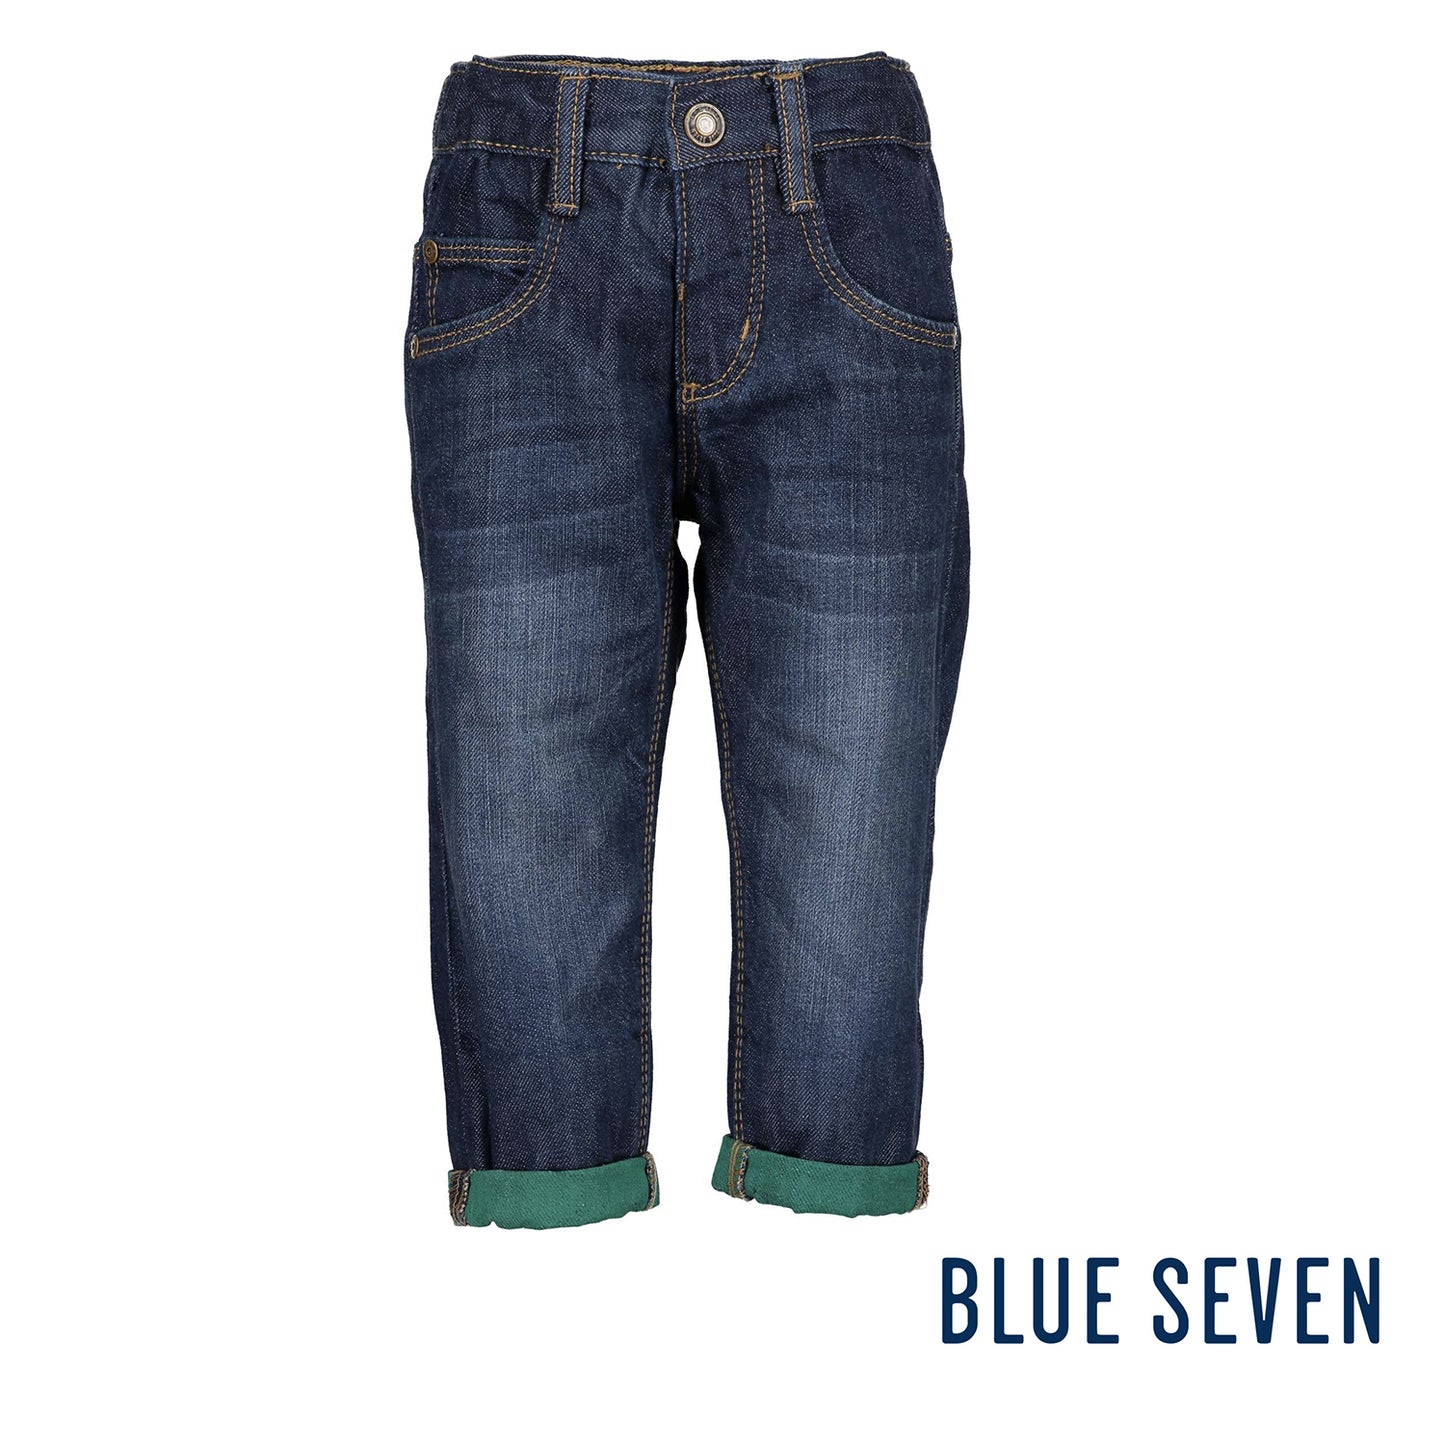 Blue Seven - Jeans Baby Bambino